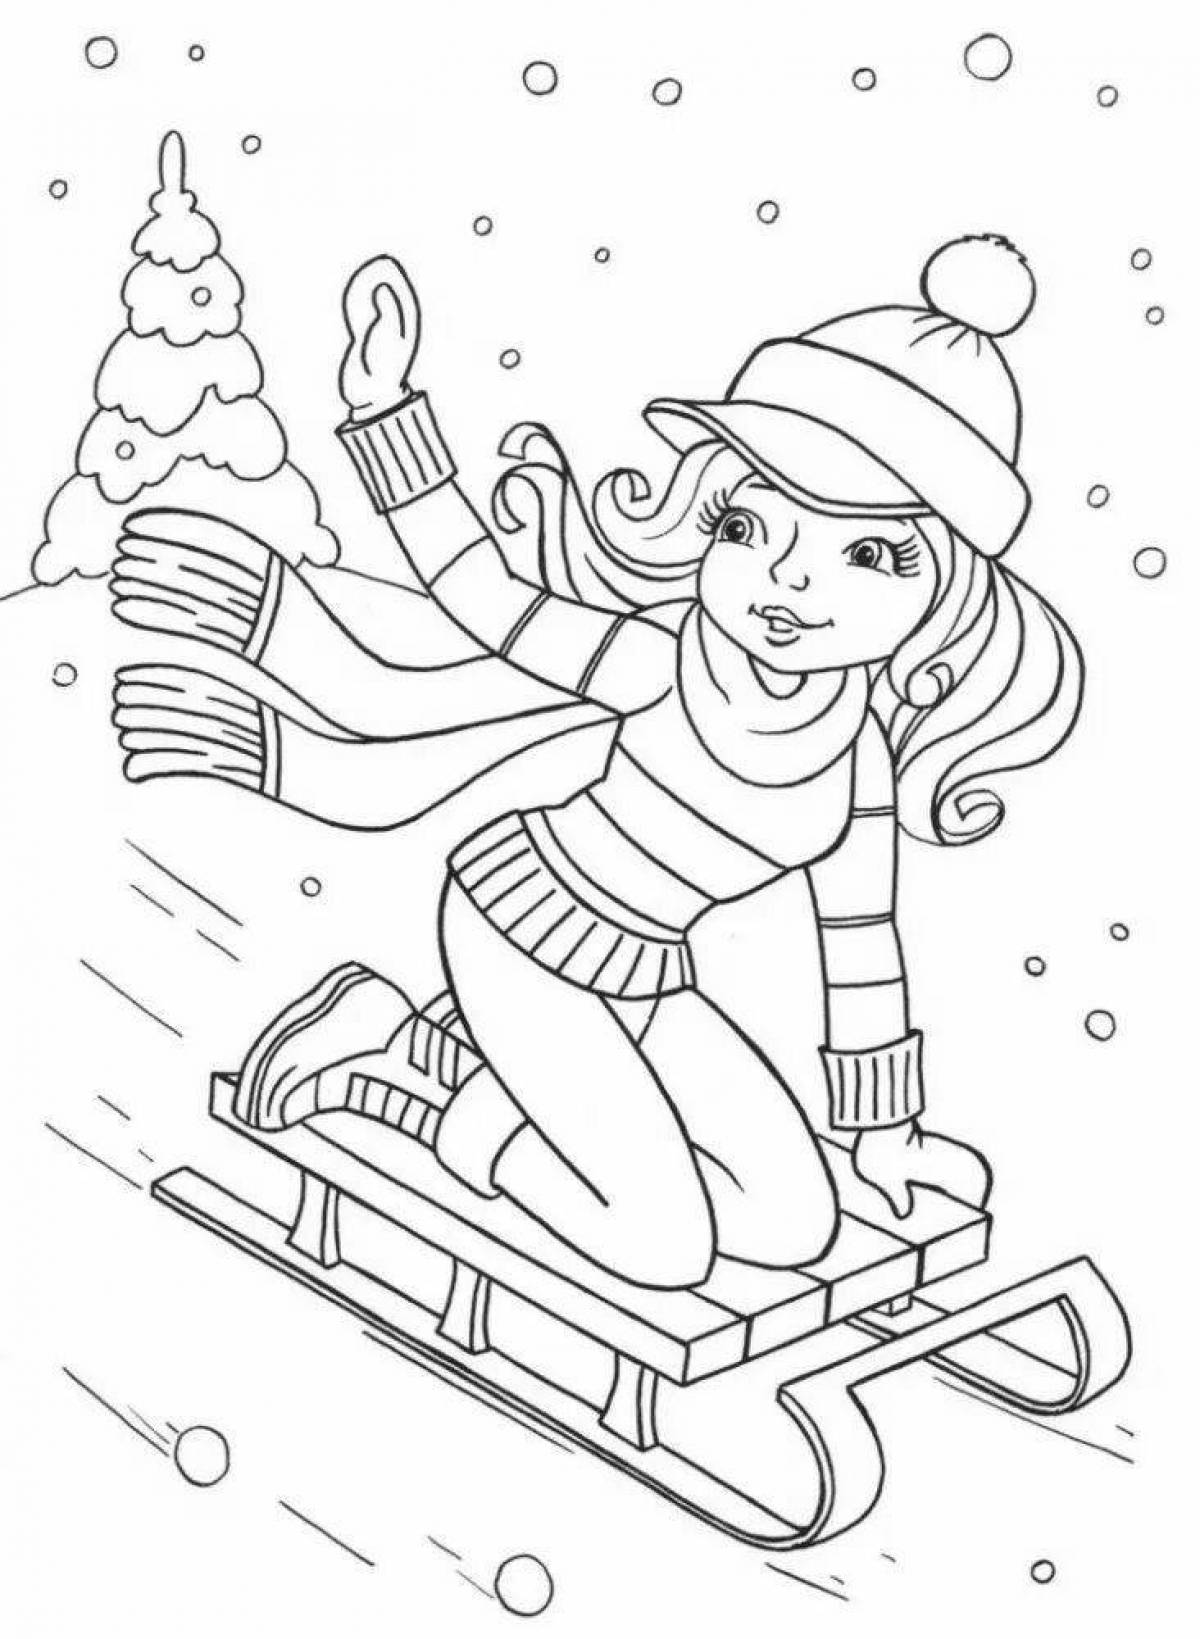 Joyful sled coloring